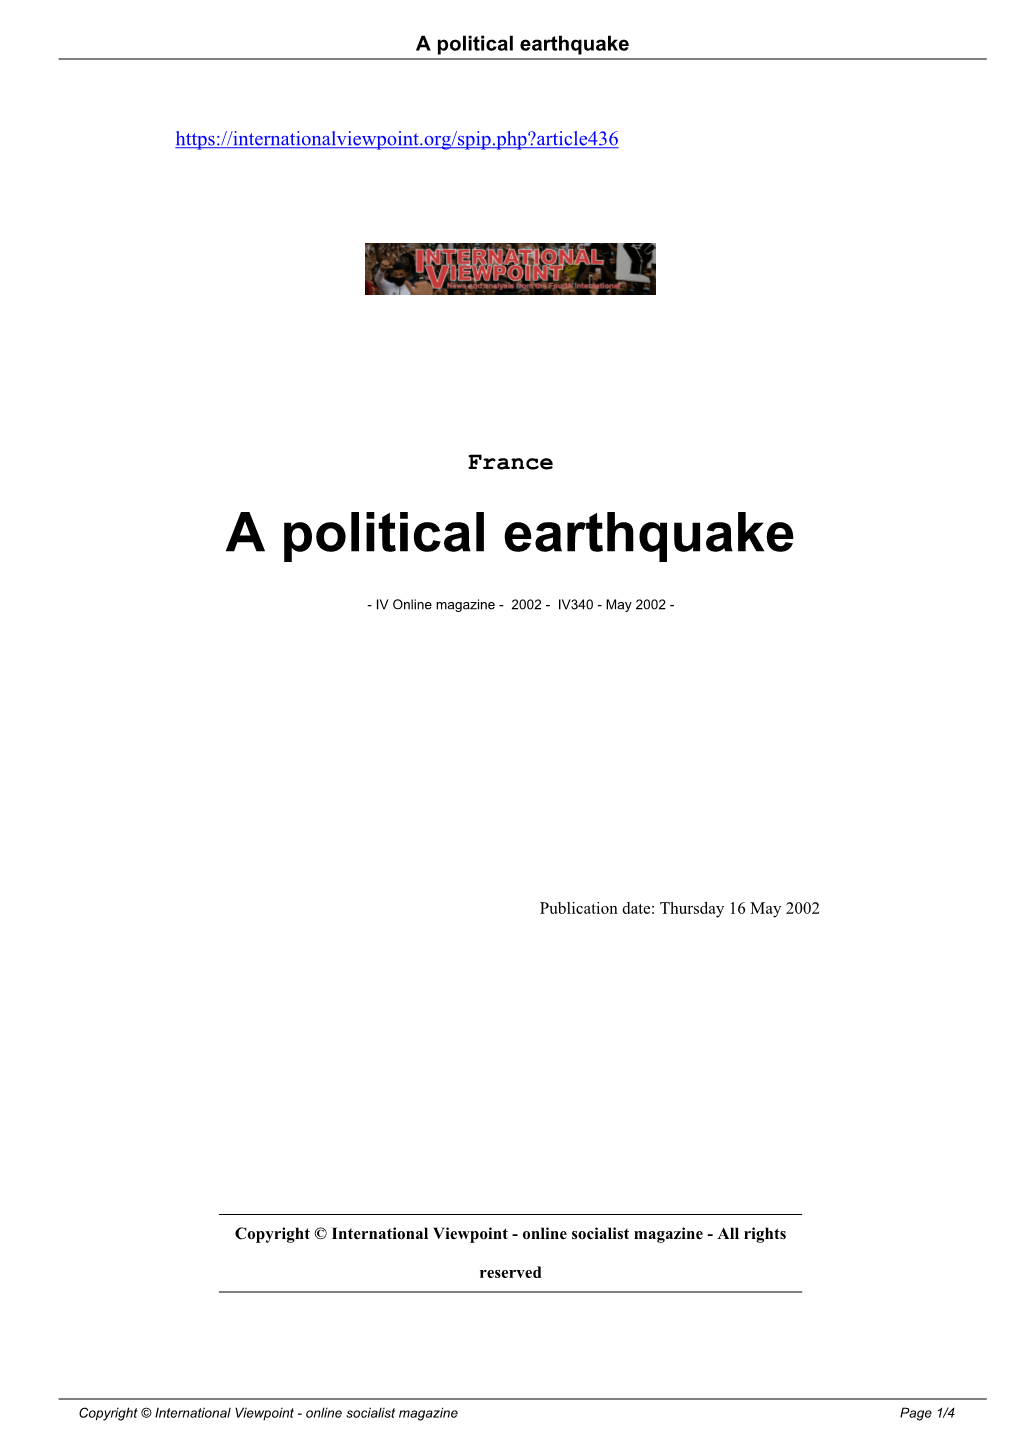 A Political Earthquake